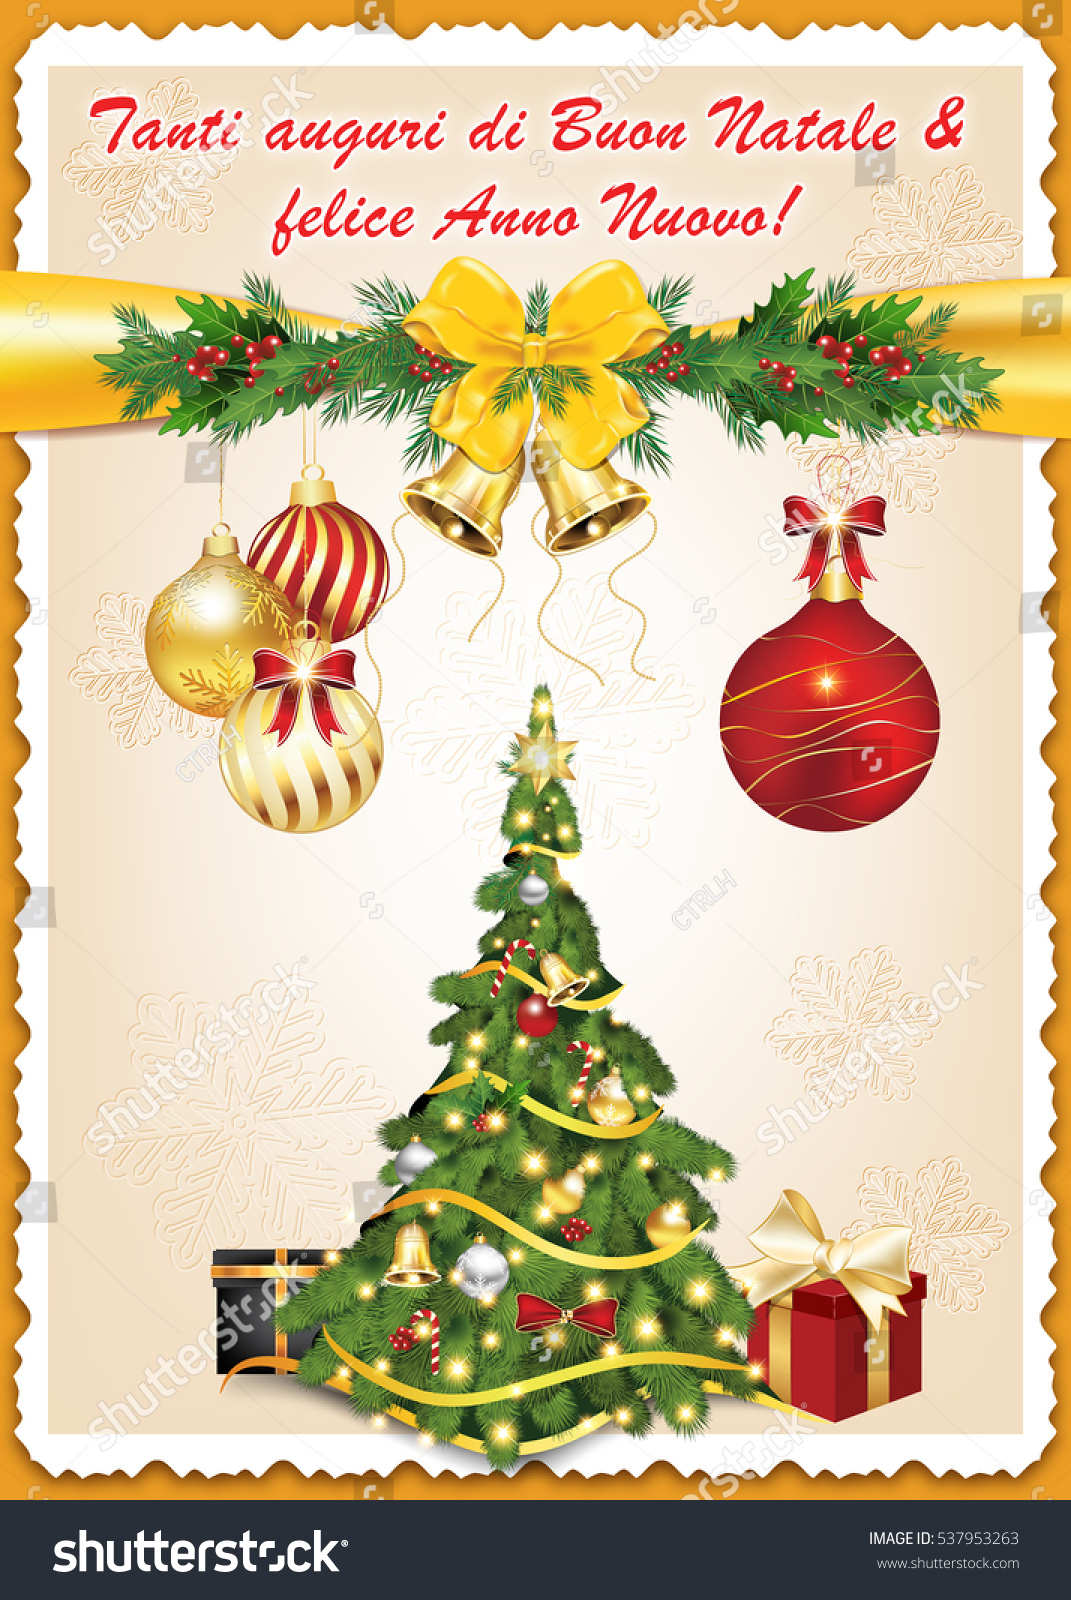 Auguri Di Buon Natale We Wish.Italian Christmas Greetings In Italian Mqfkap 2020newyear Site